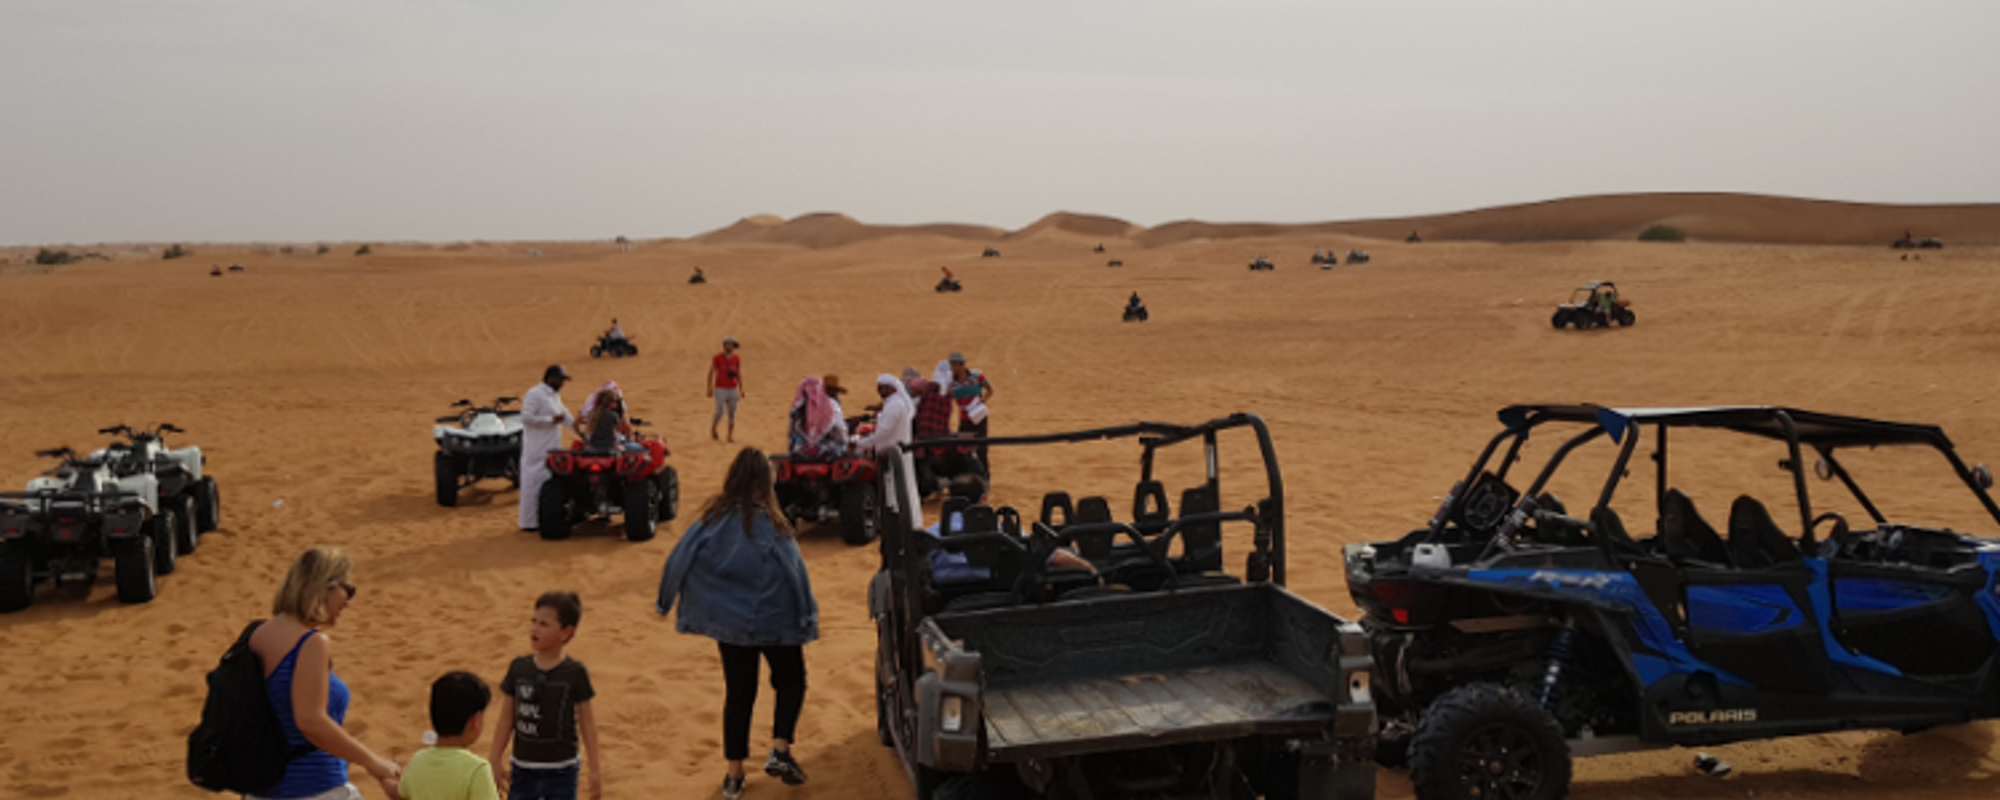 [Trip to UAE] Desert Safari Tour